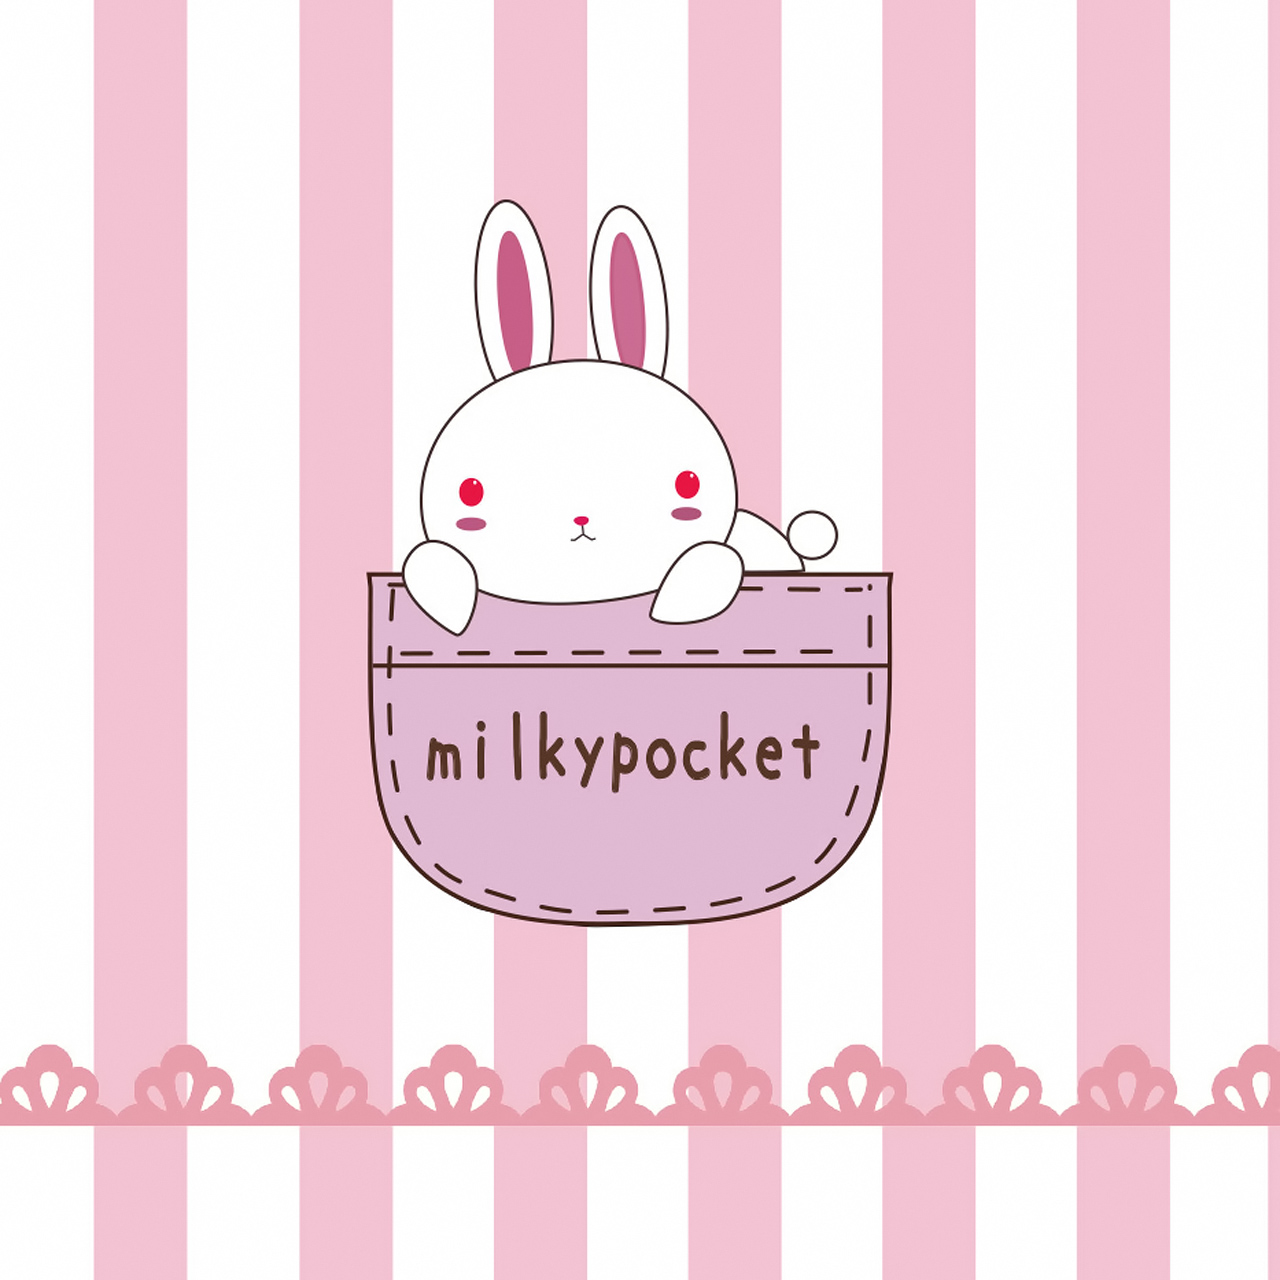 milkypocket